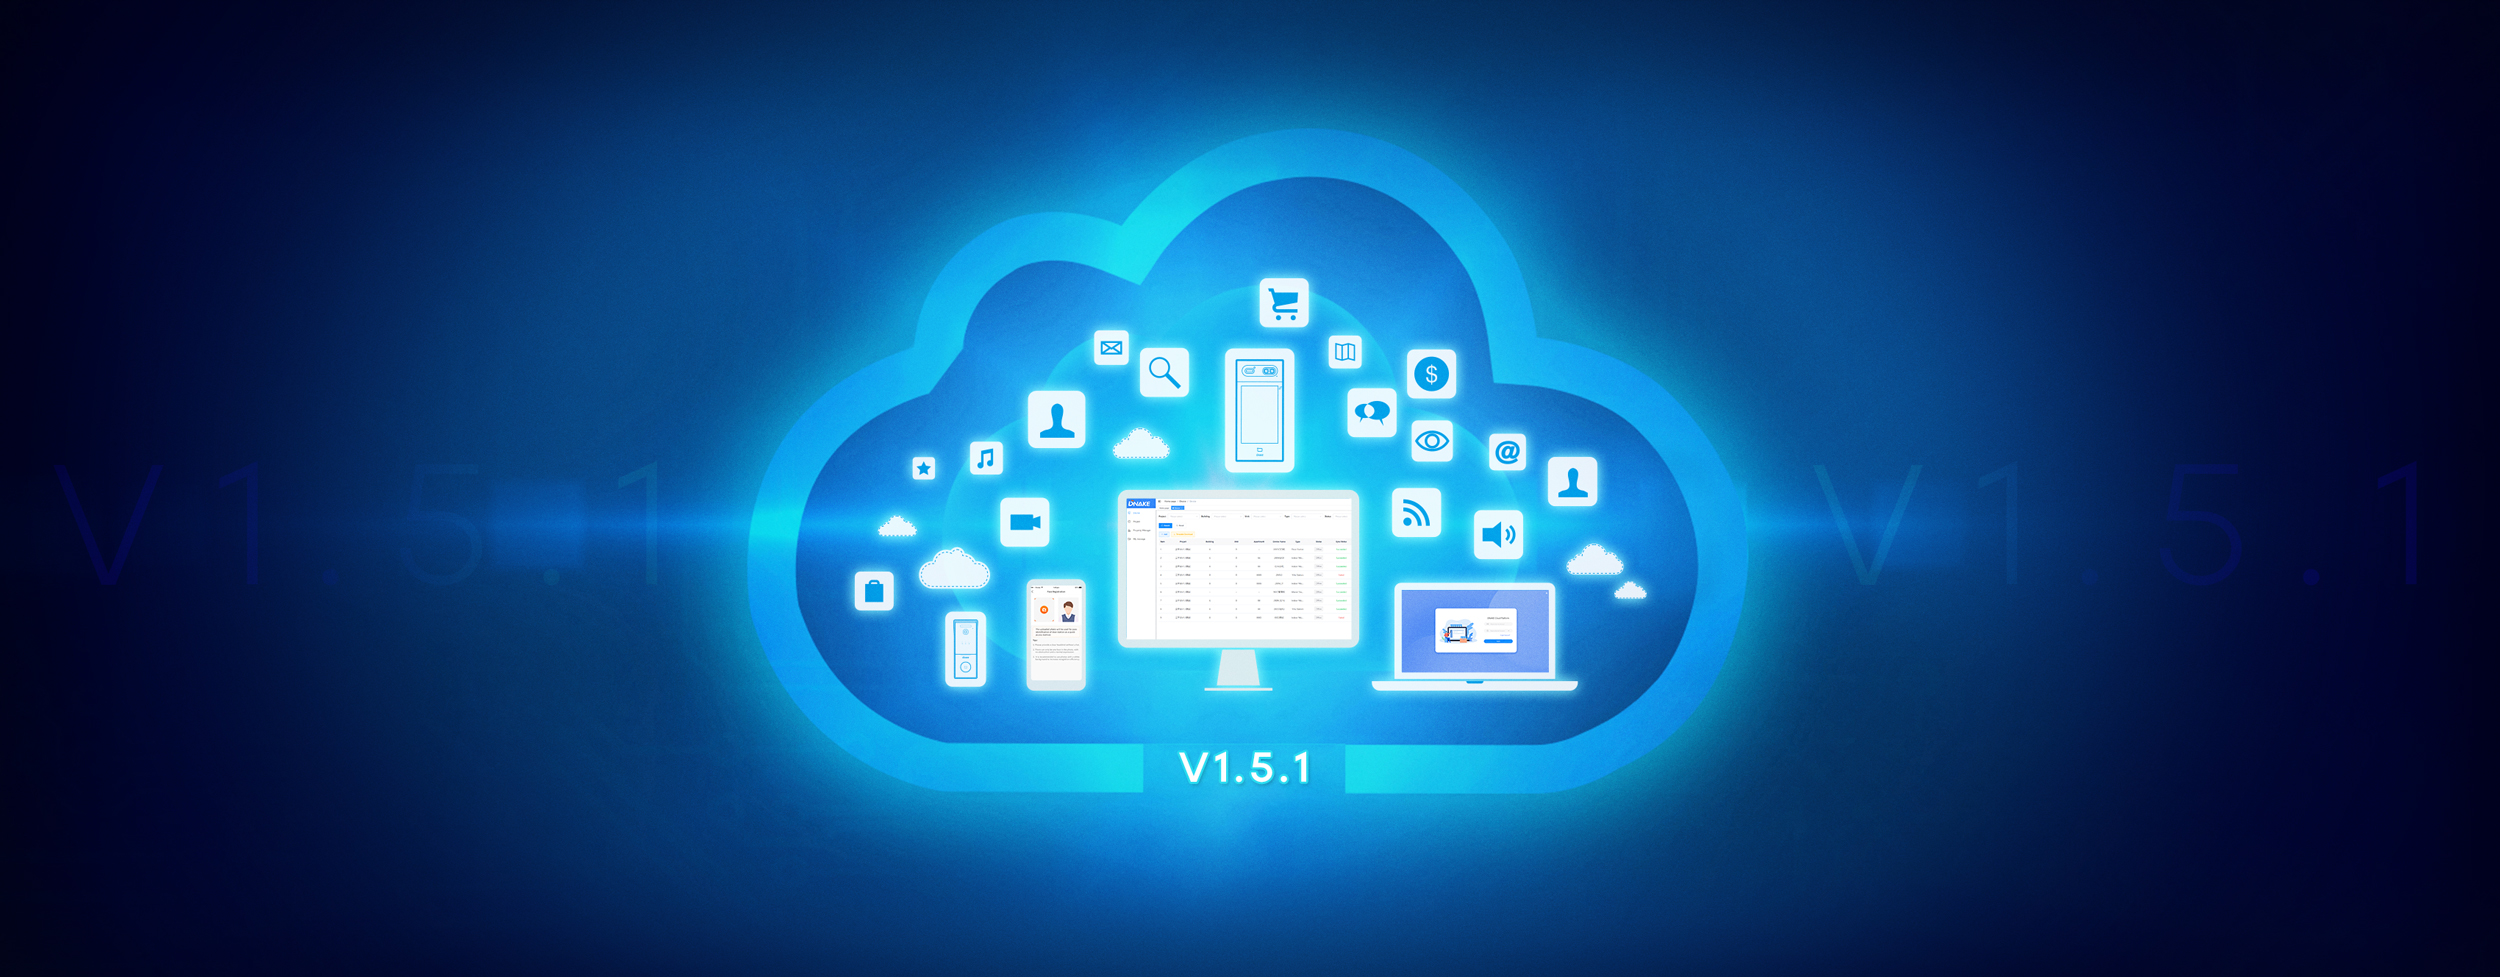 Cloud-Platform-V1.5.1 பேனர்